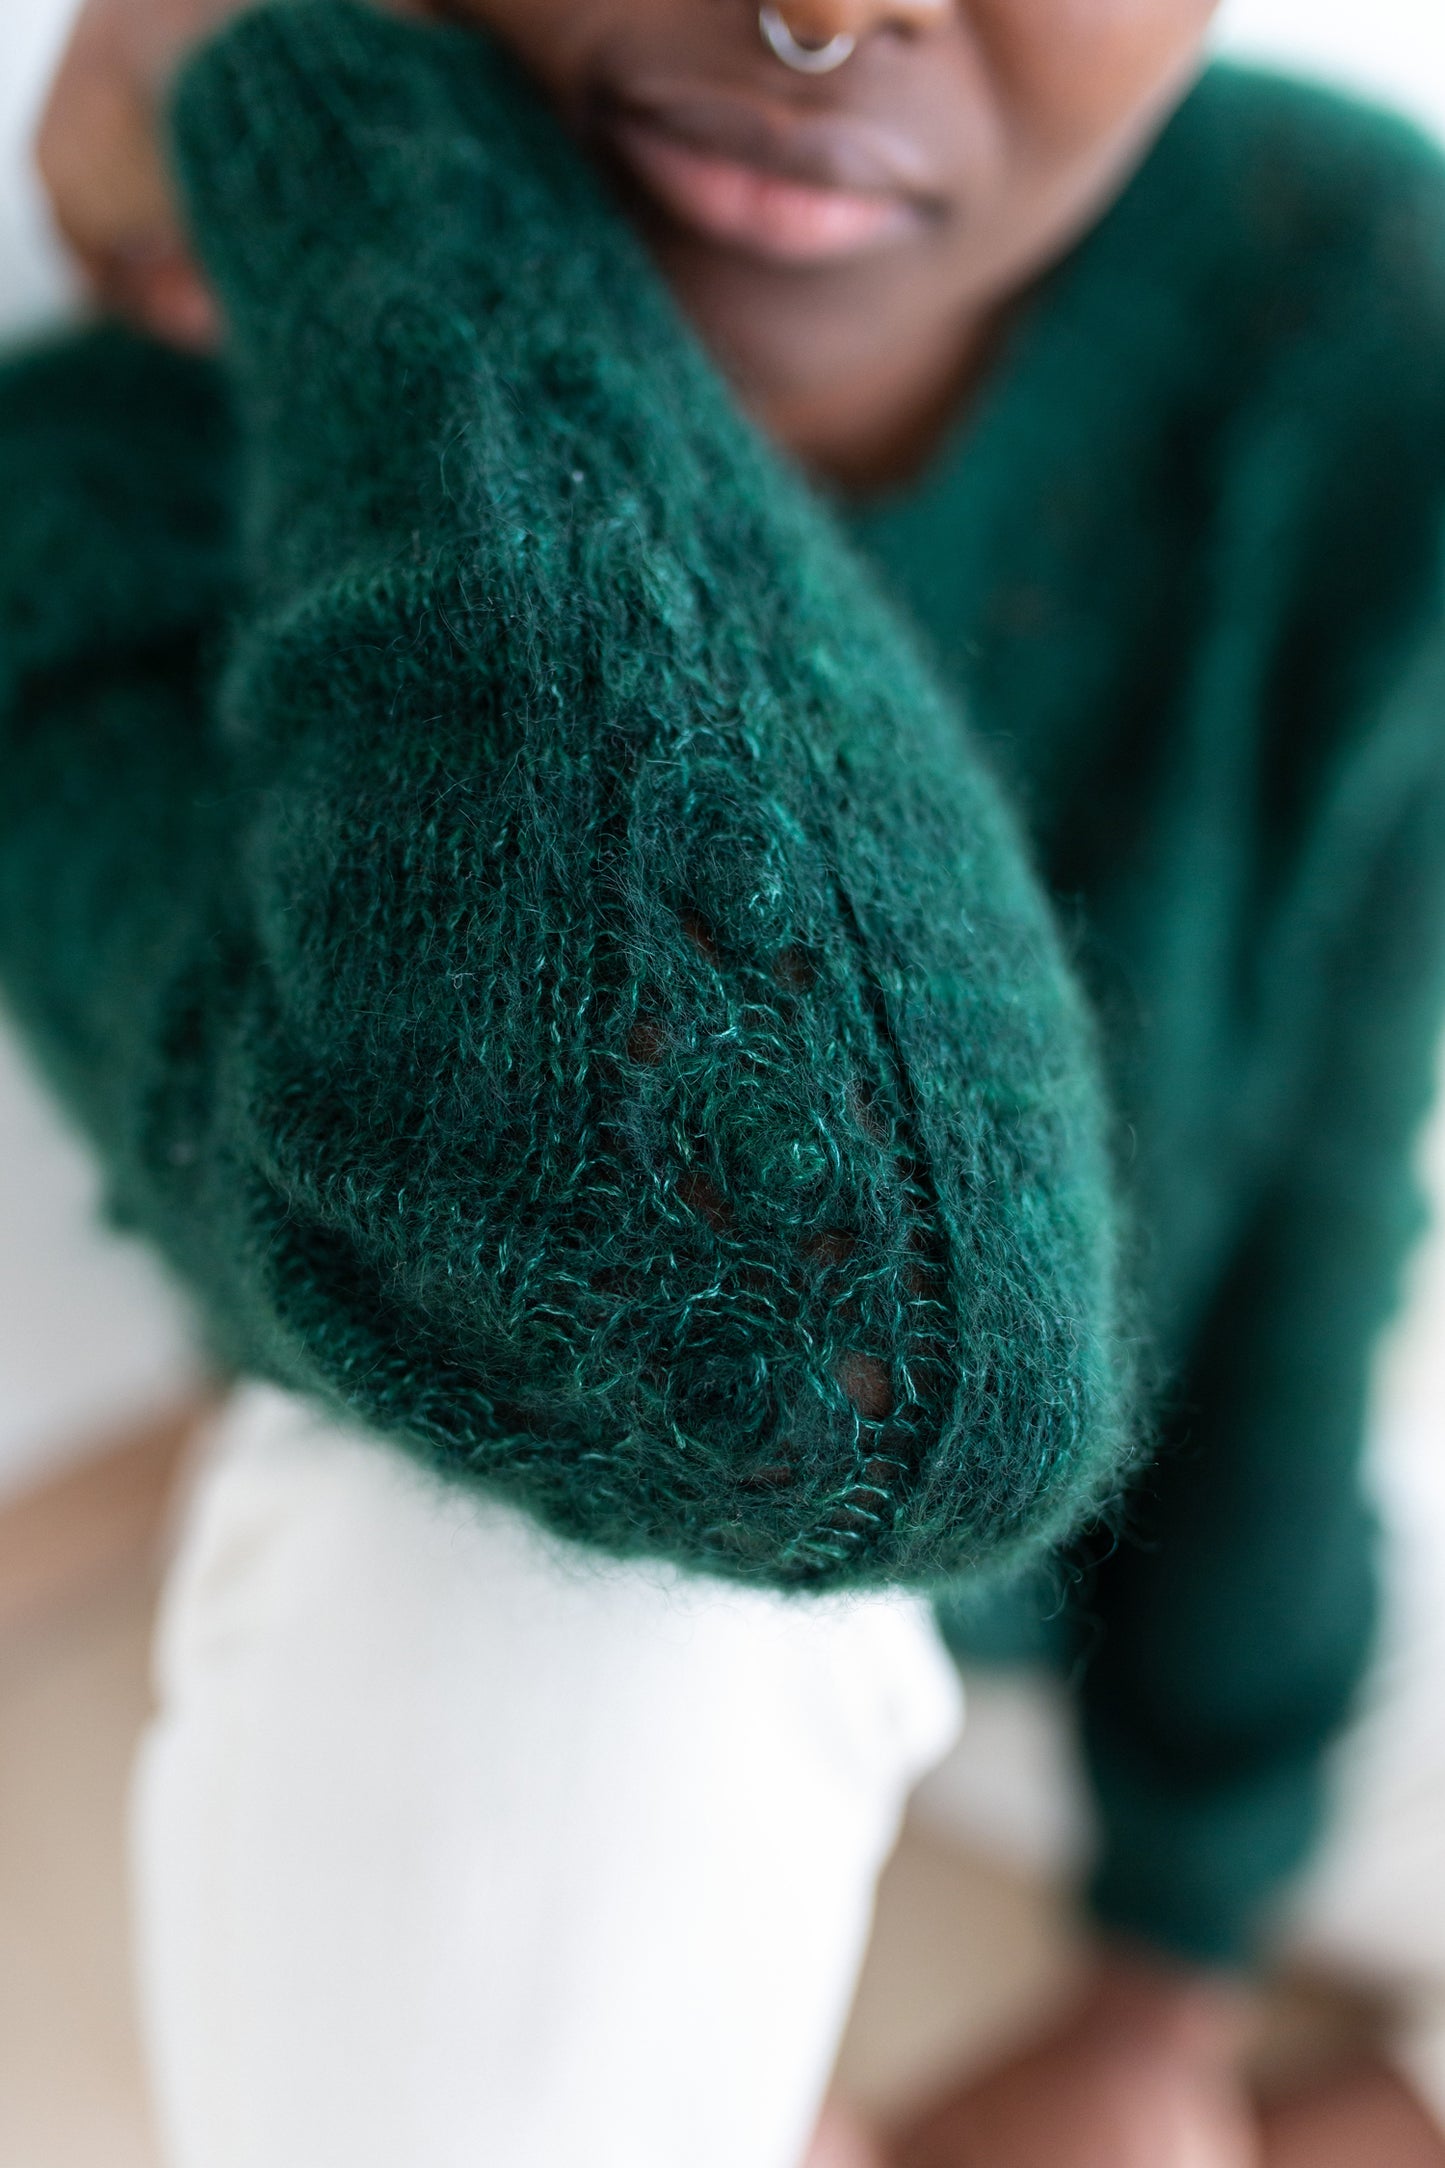 Lace Yoke Sweater in Kid Mohair Silk "After the Rain" Knitting Pattern